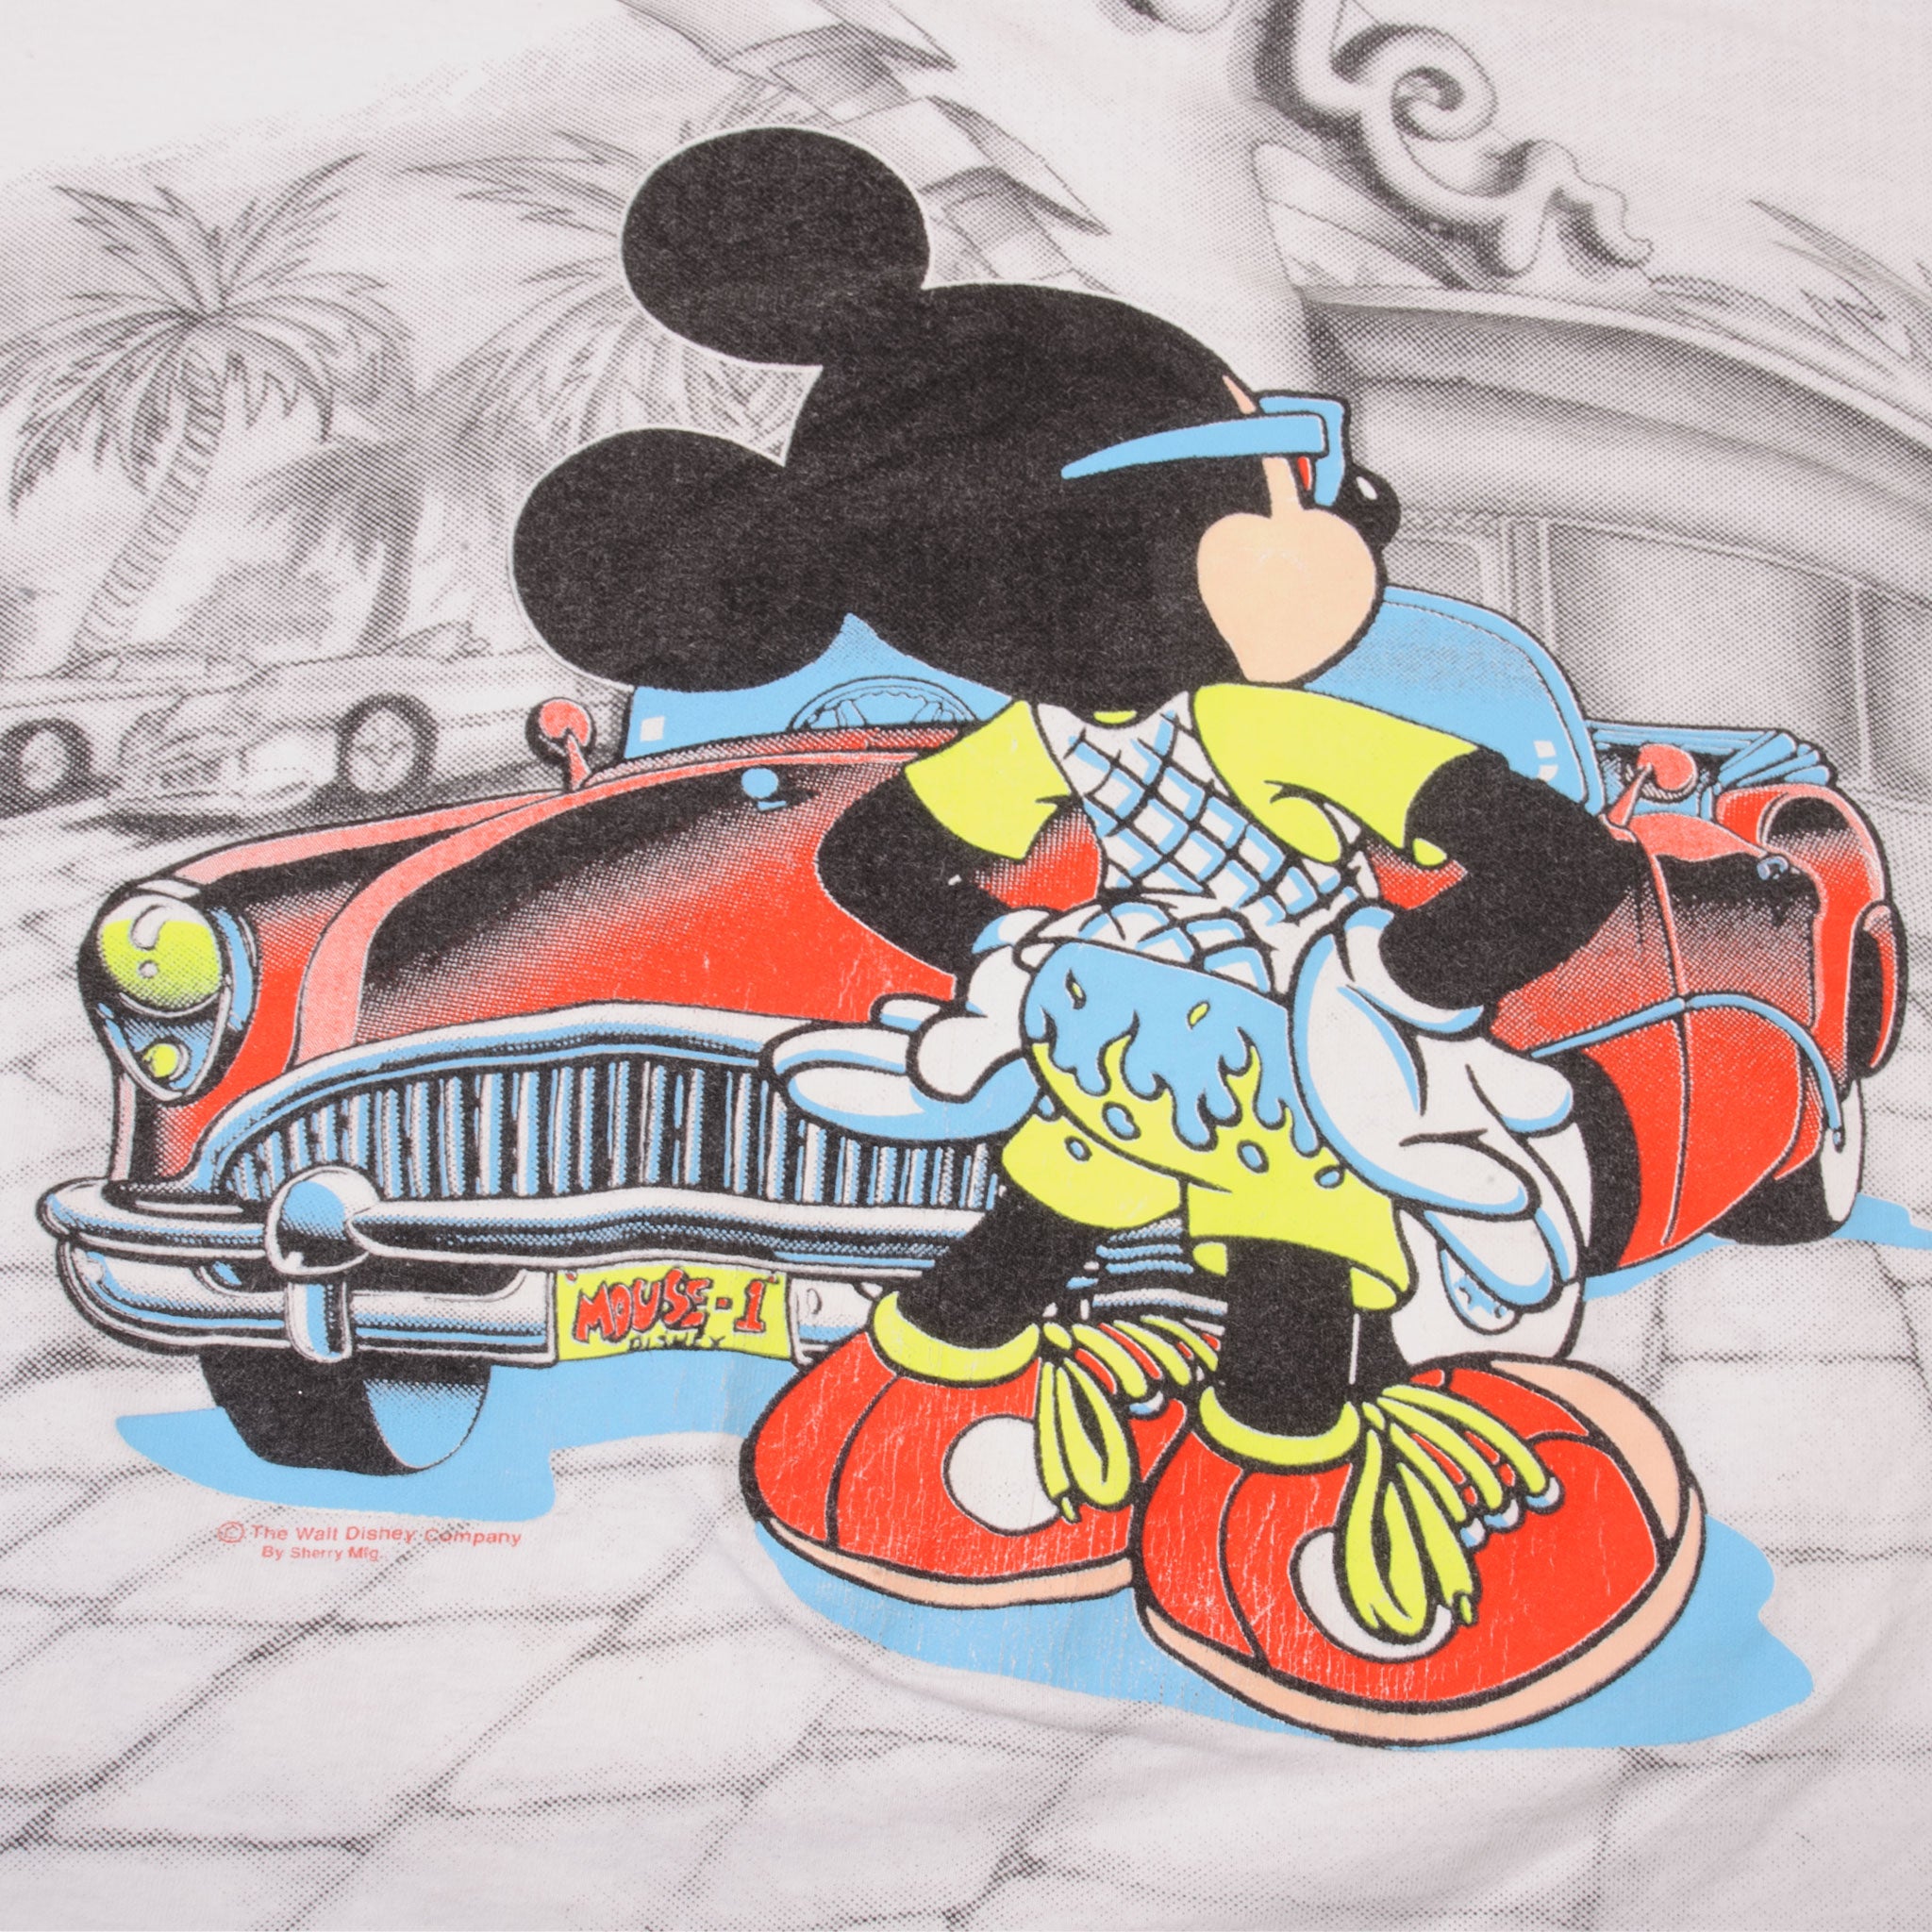 Louis Vuitton Mickey Mouse Disney Shirt - Vintage & Classic Tee